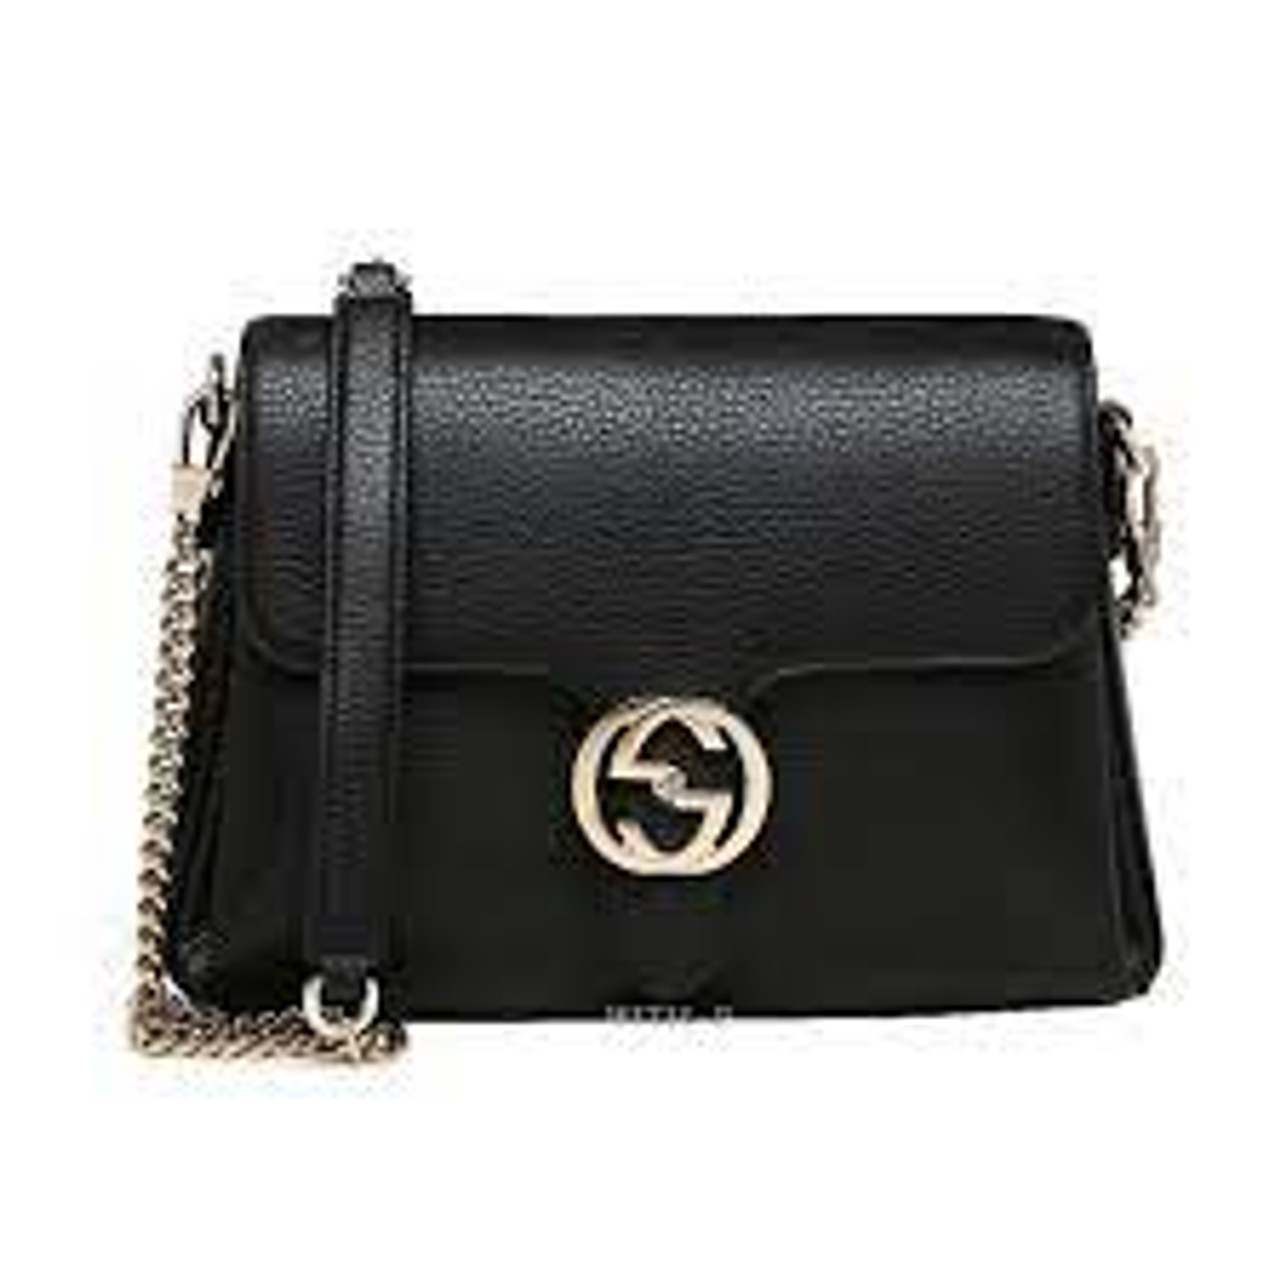 Black velvet Gucci Marmont mini purse with gold... - Depop